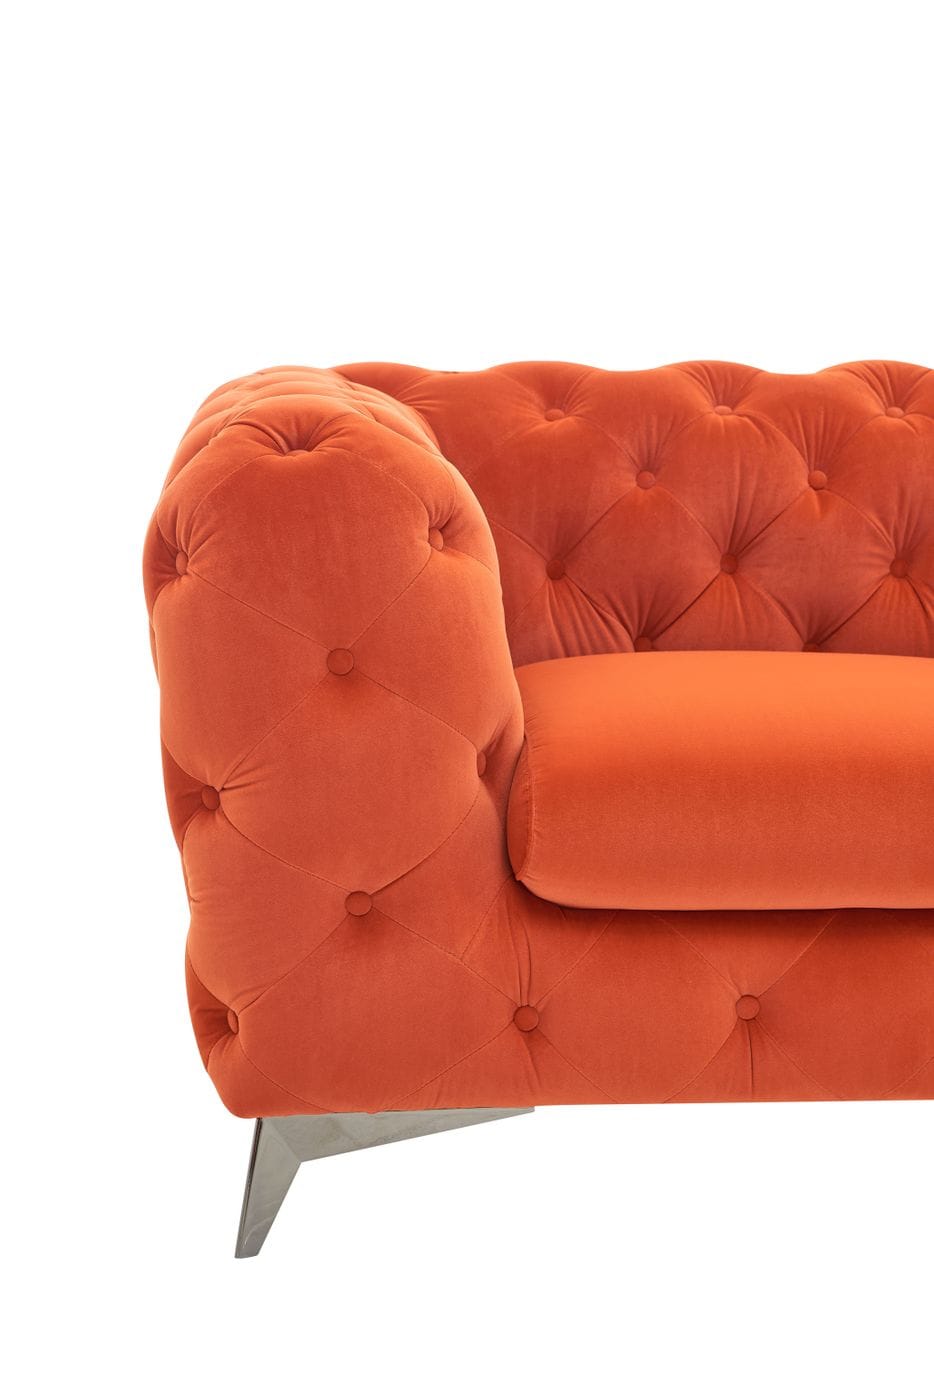 Divani Casa Delilah - Modern Orange Fabric Chair-2